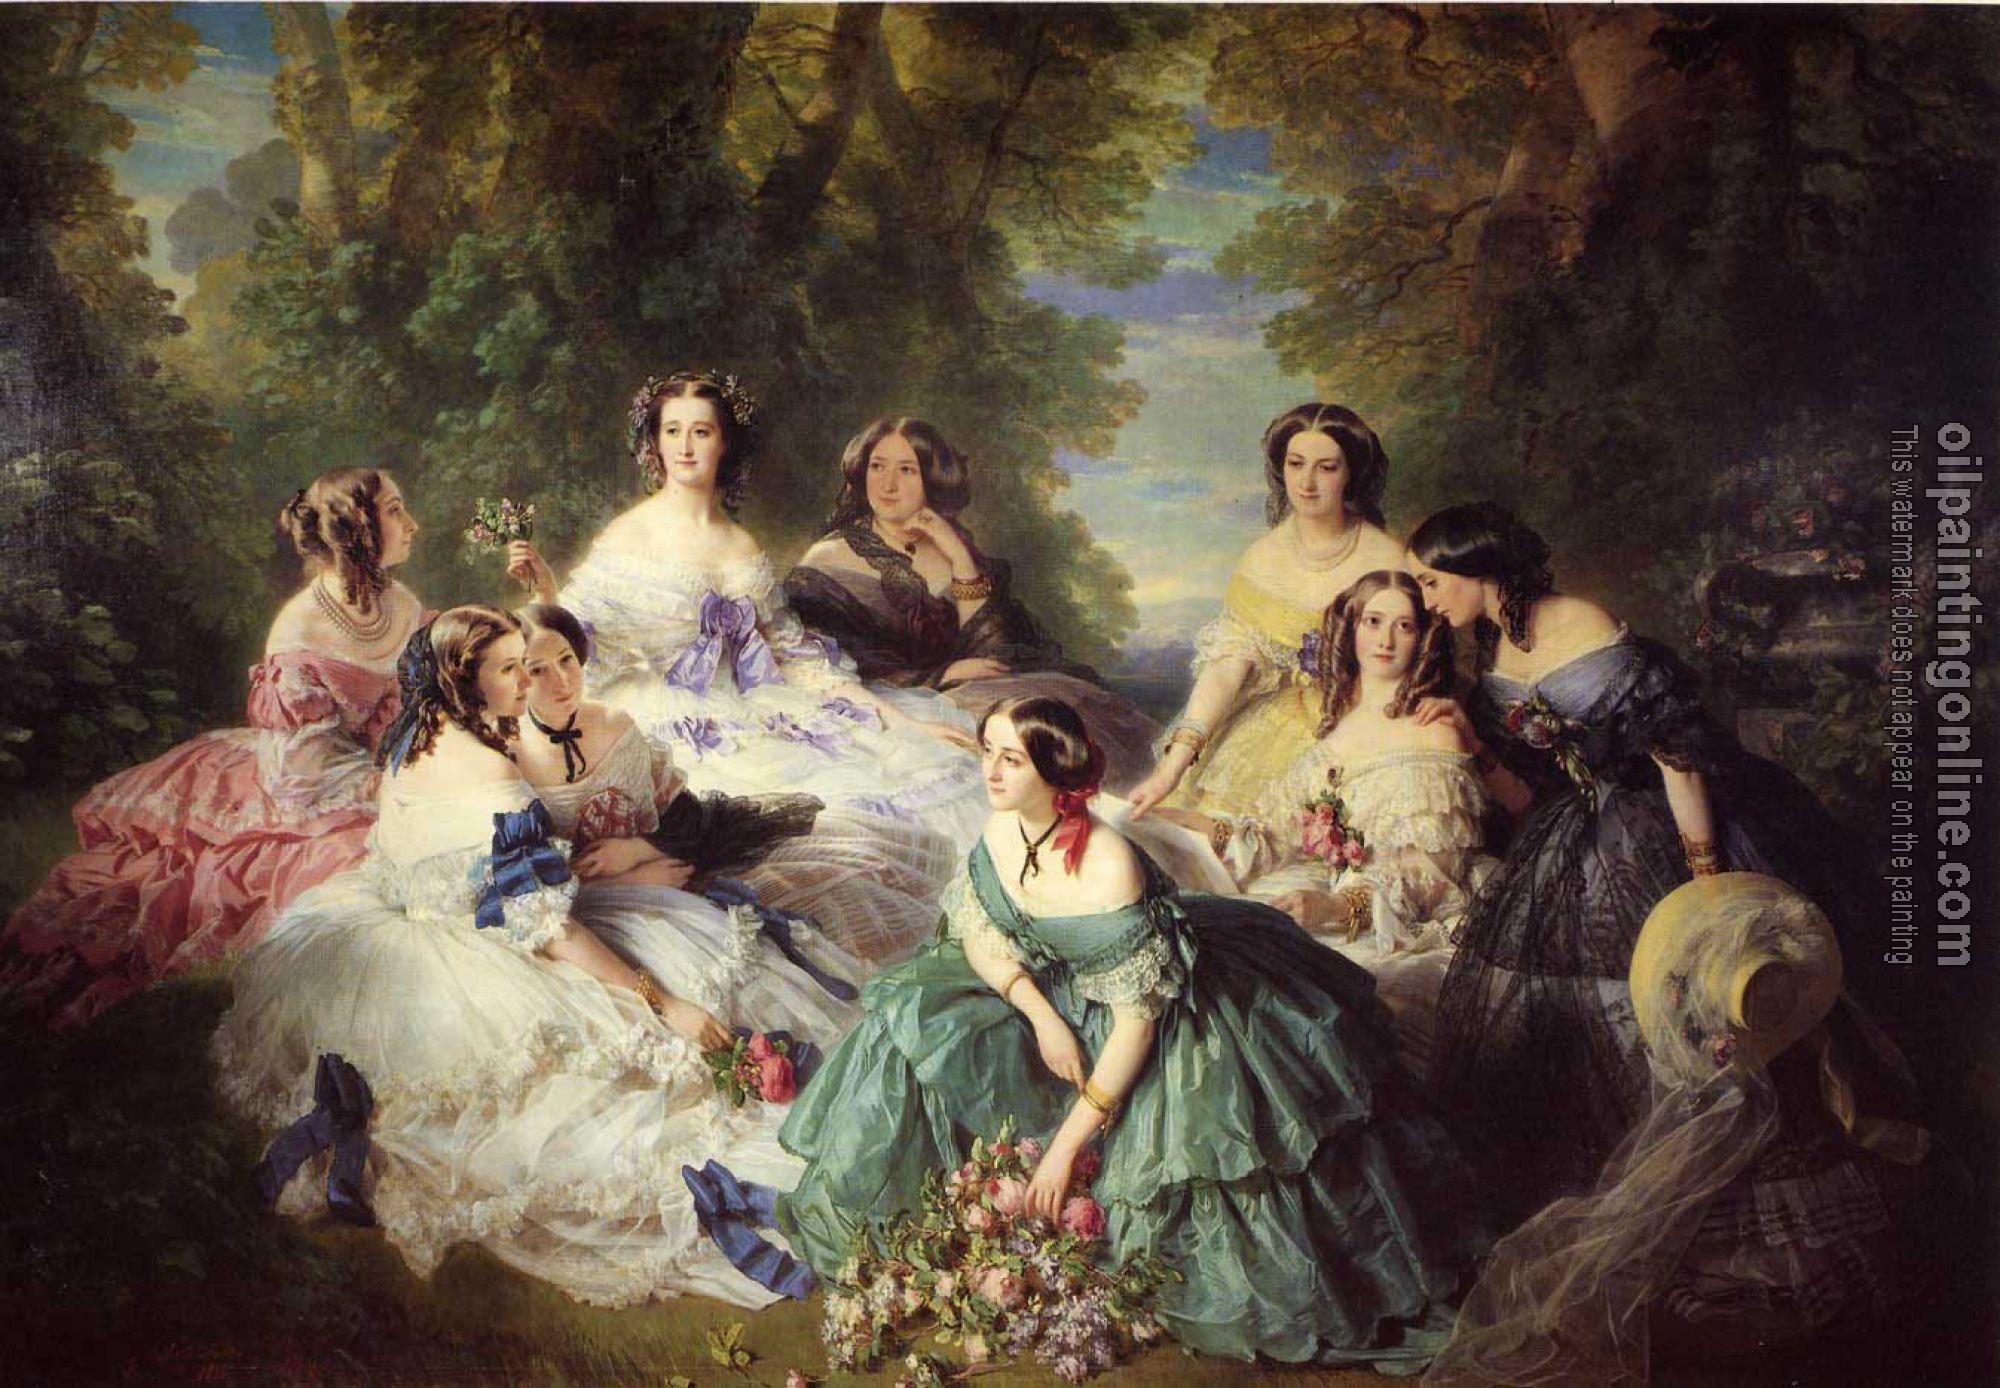 Winterhalter, Franz Xavier - The Empress Eugenie Surrounded by her Ladies in Waiting